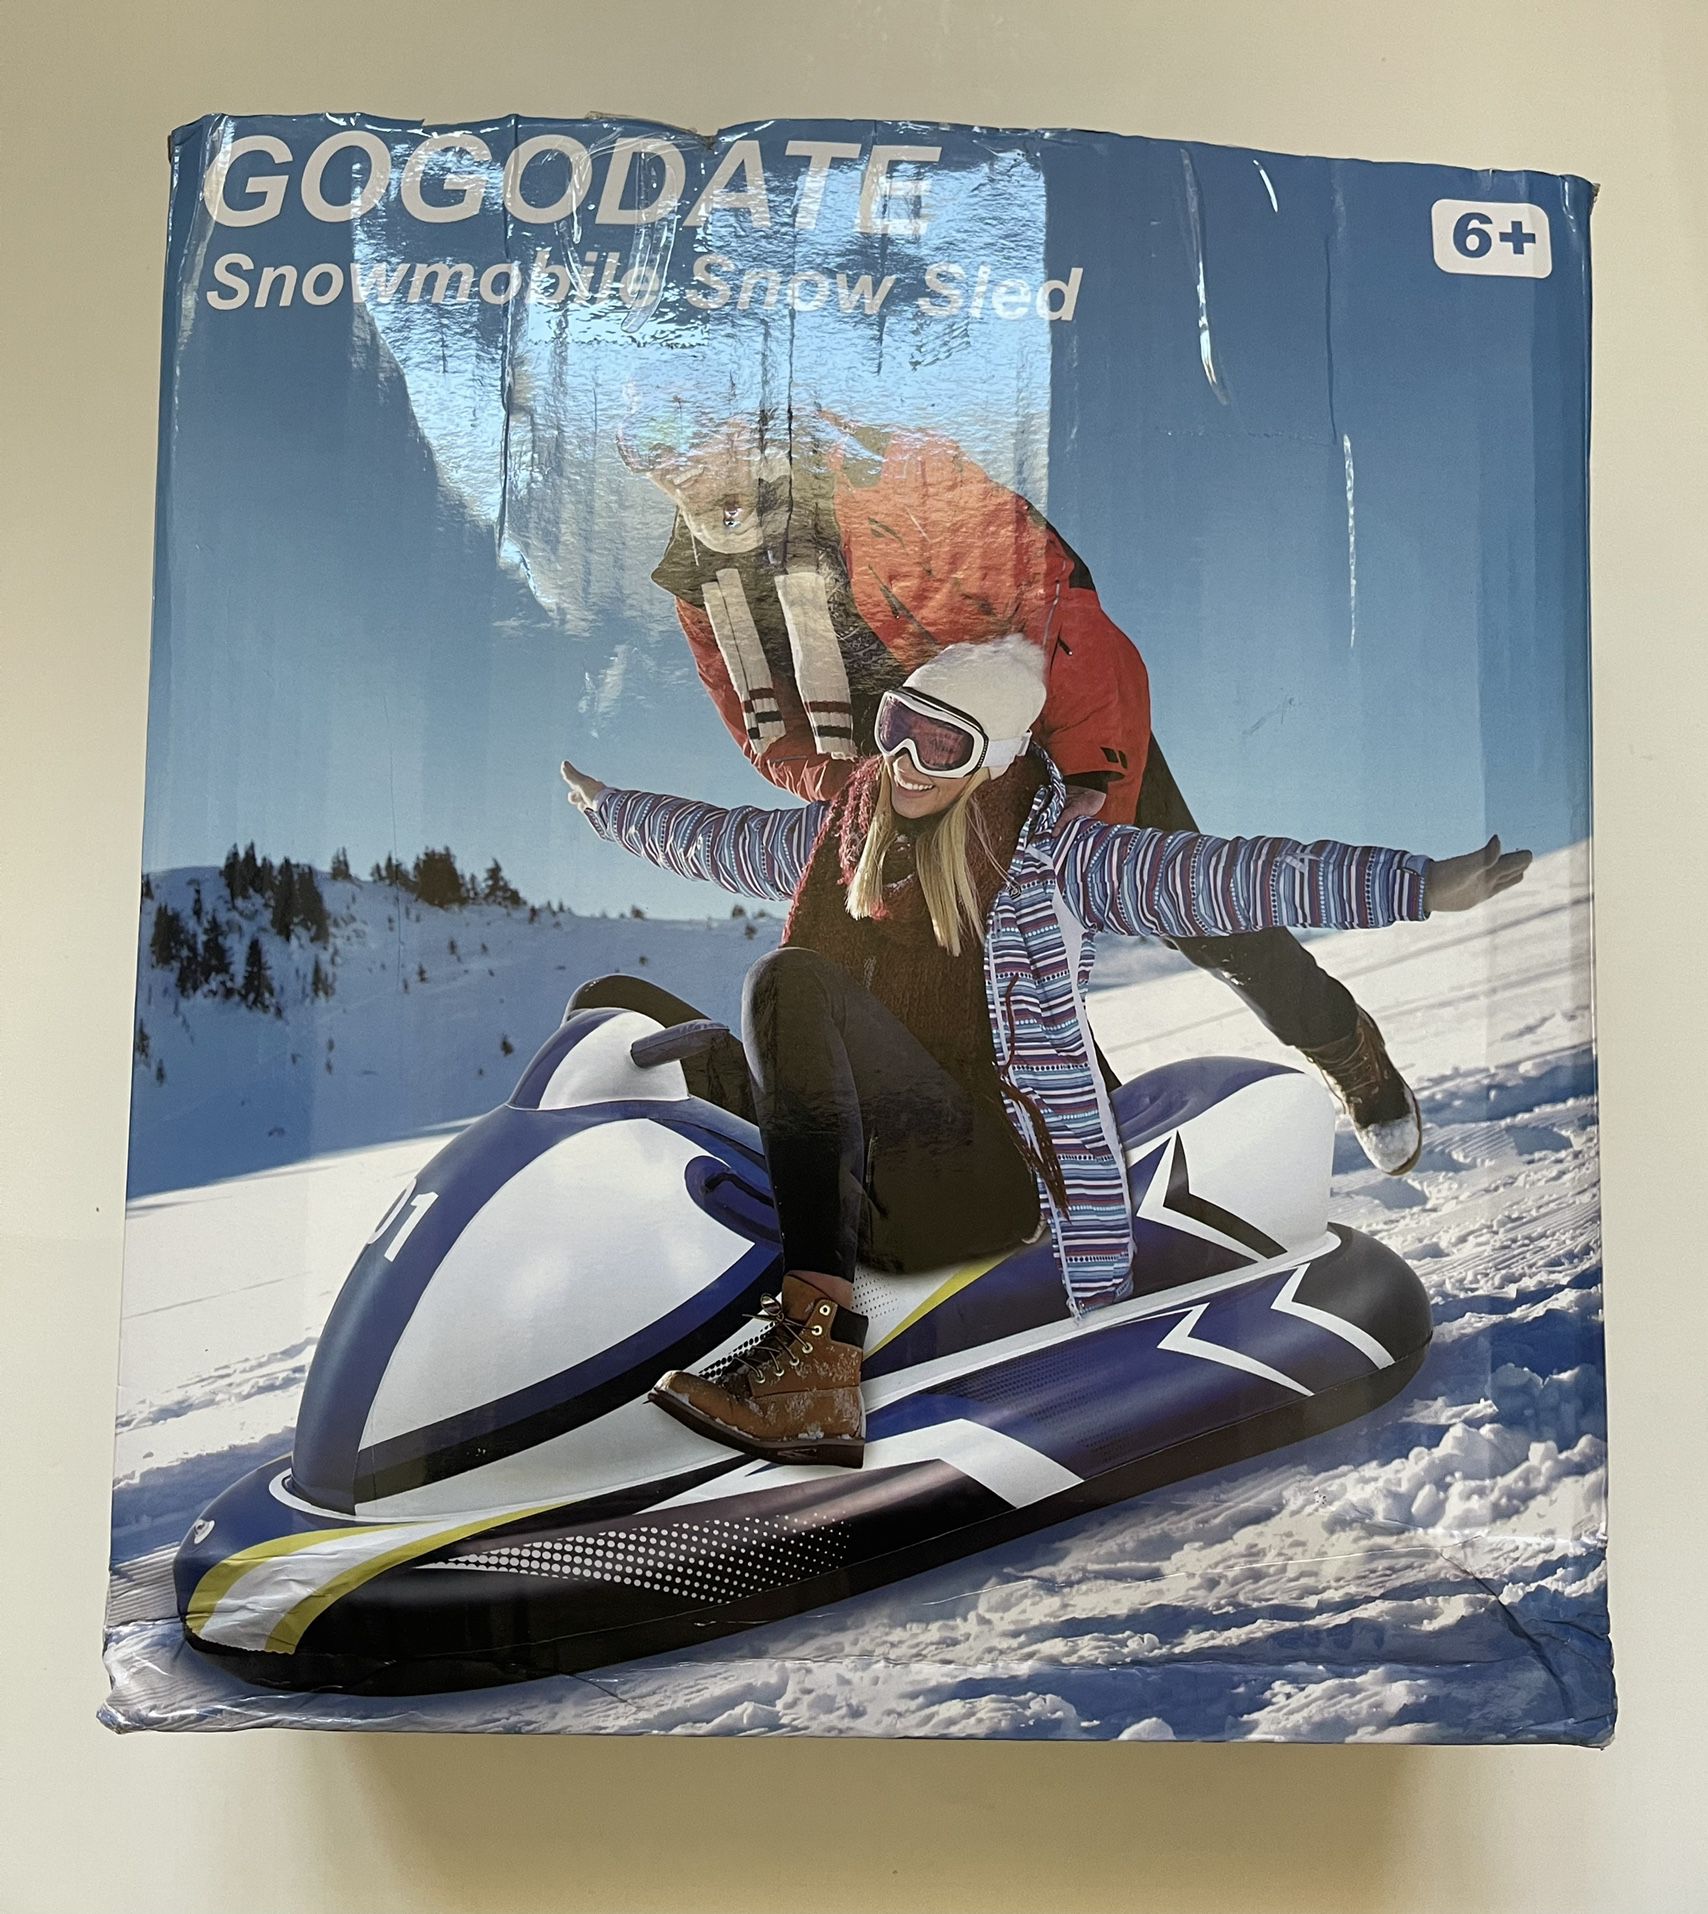 GOGODATR Snowmobile Snow Sled